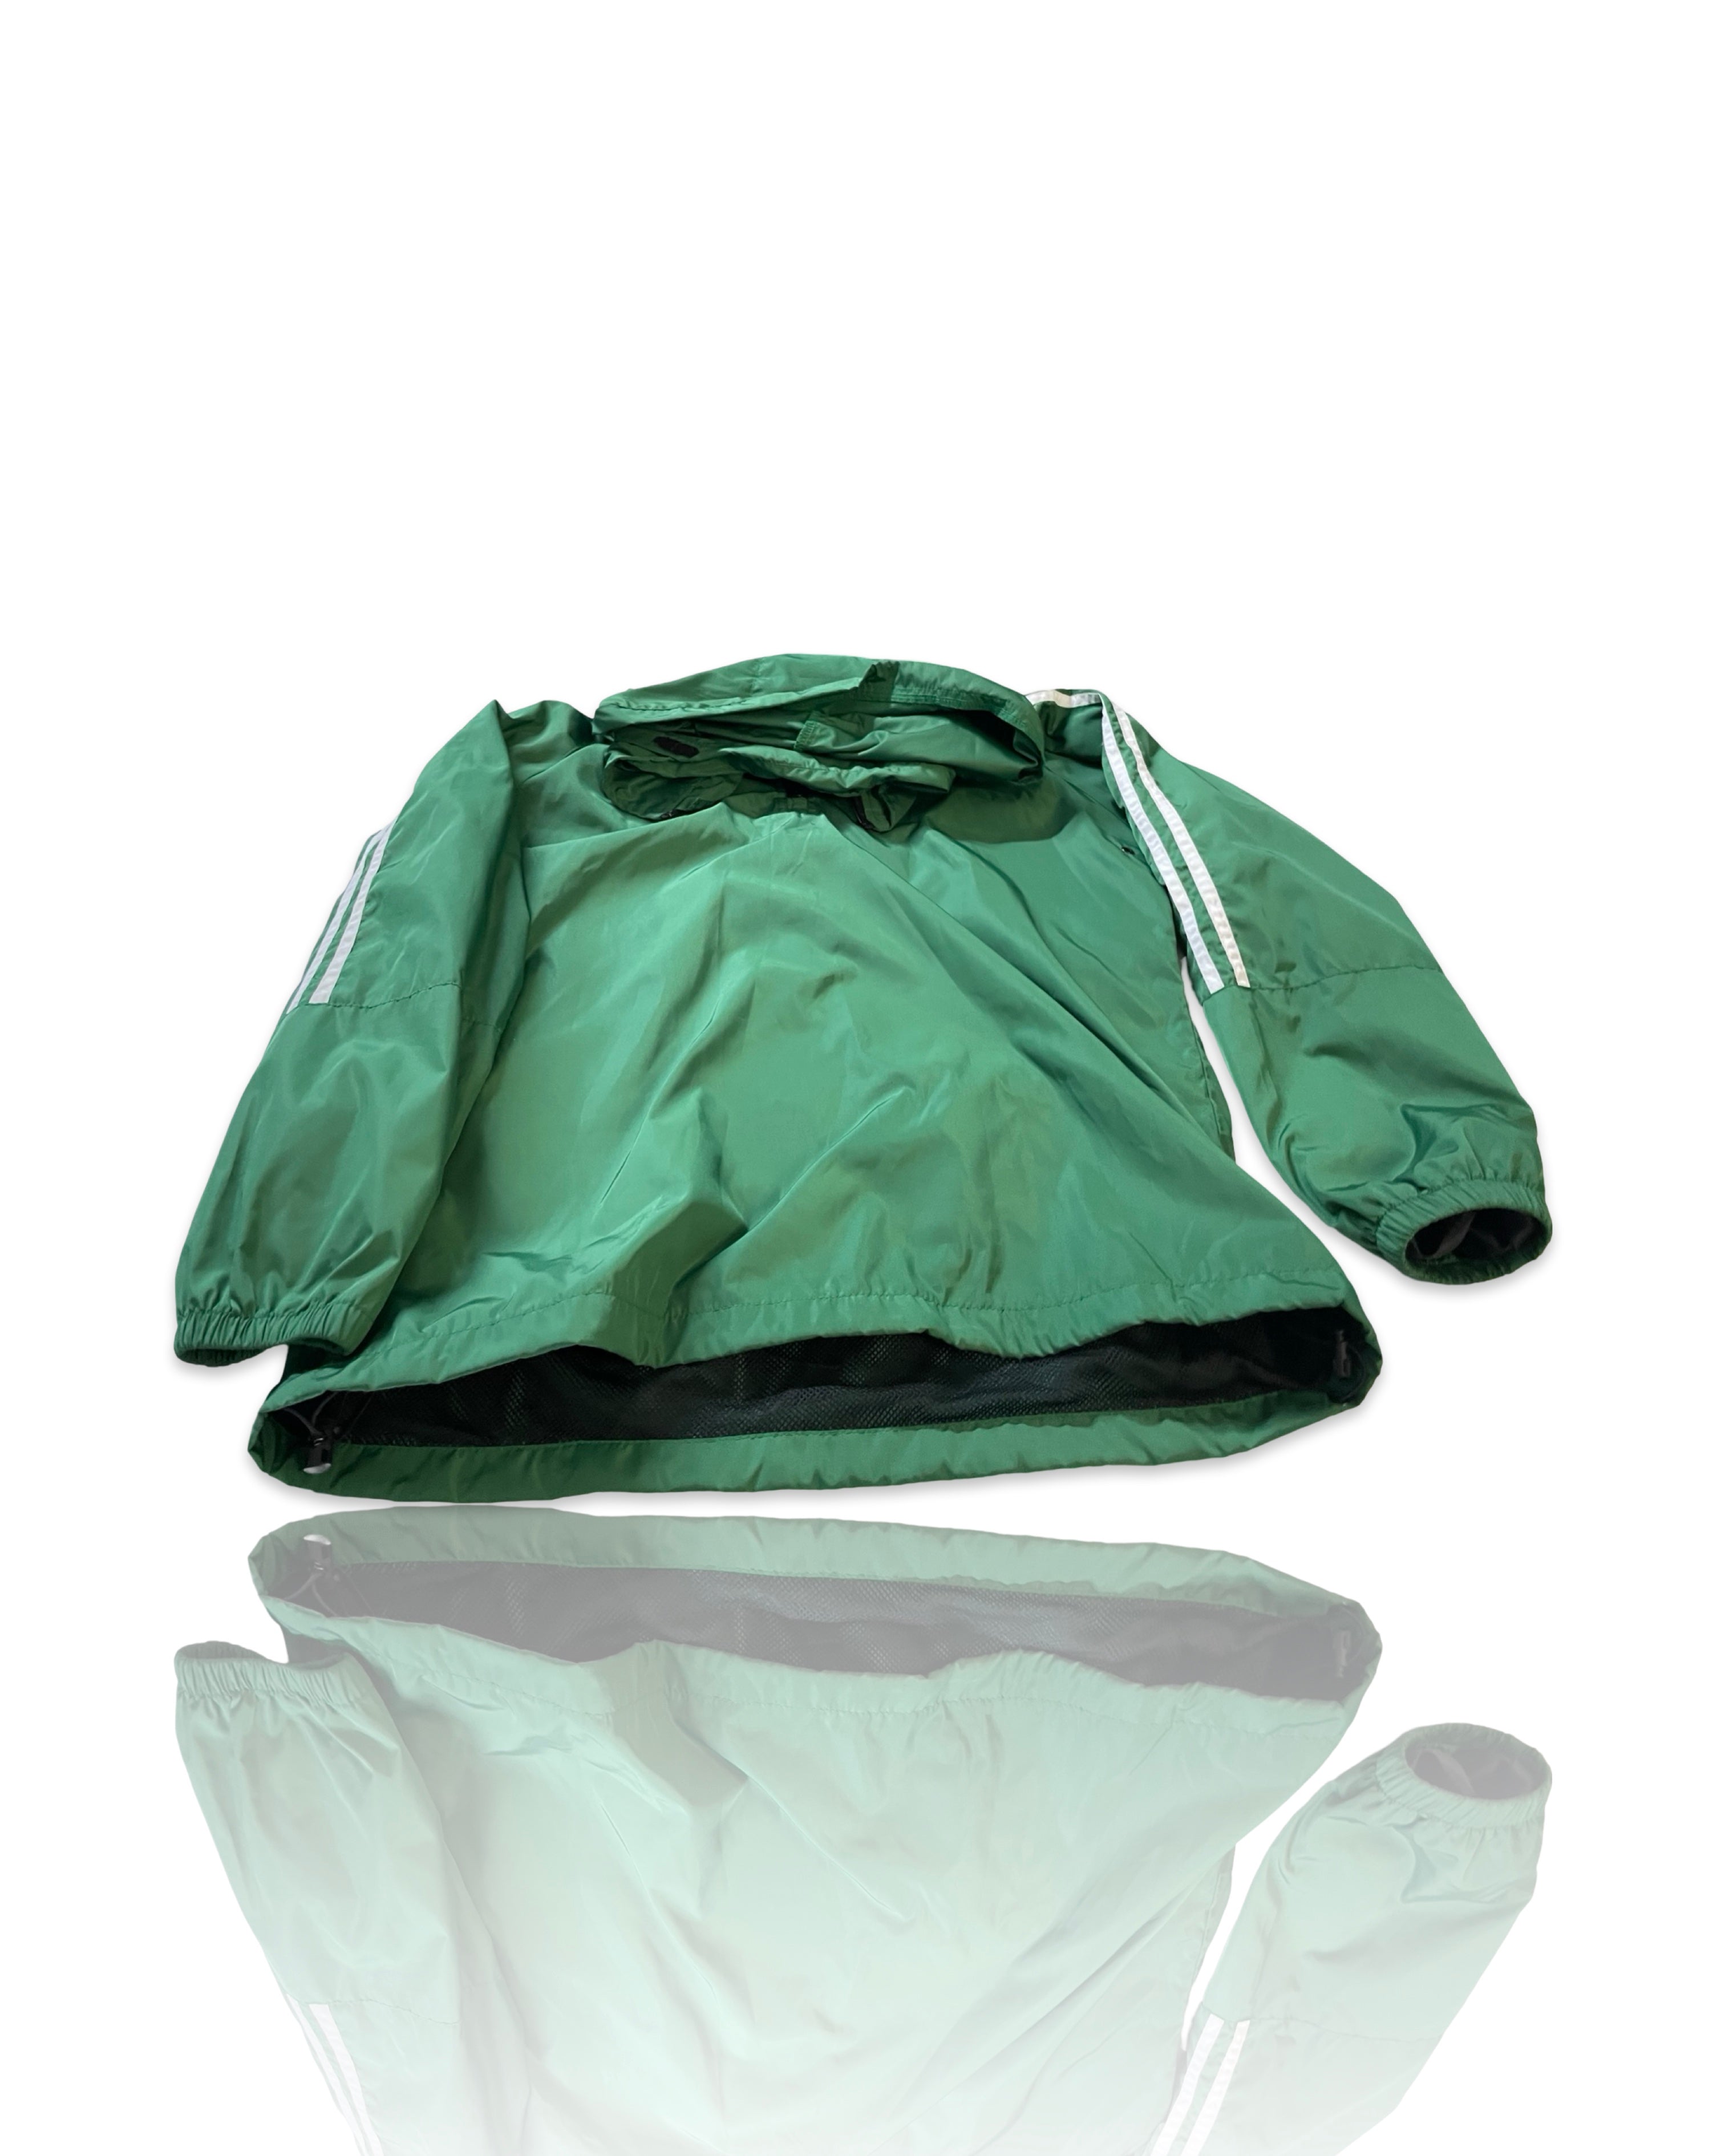 Vintage lightweight Balcon green mens windbreaker jacket in size small TO Medium L28 W22| SKU 4177